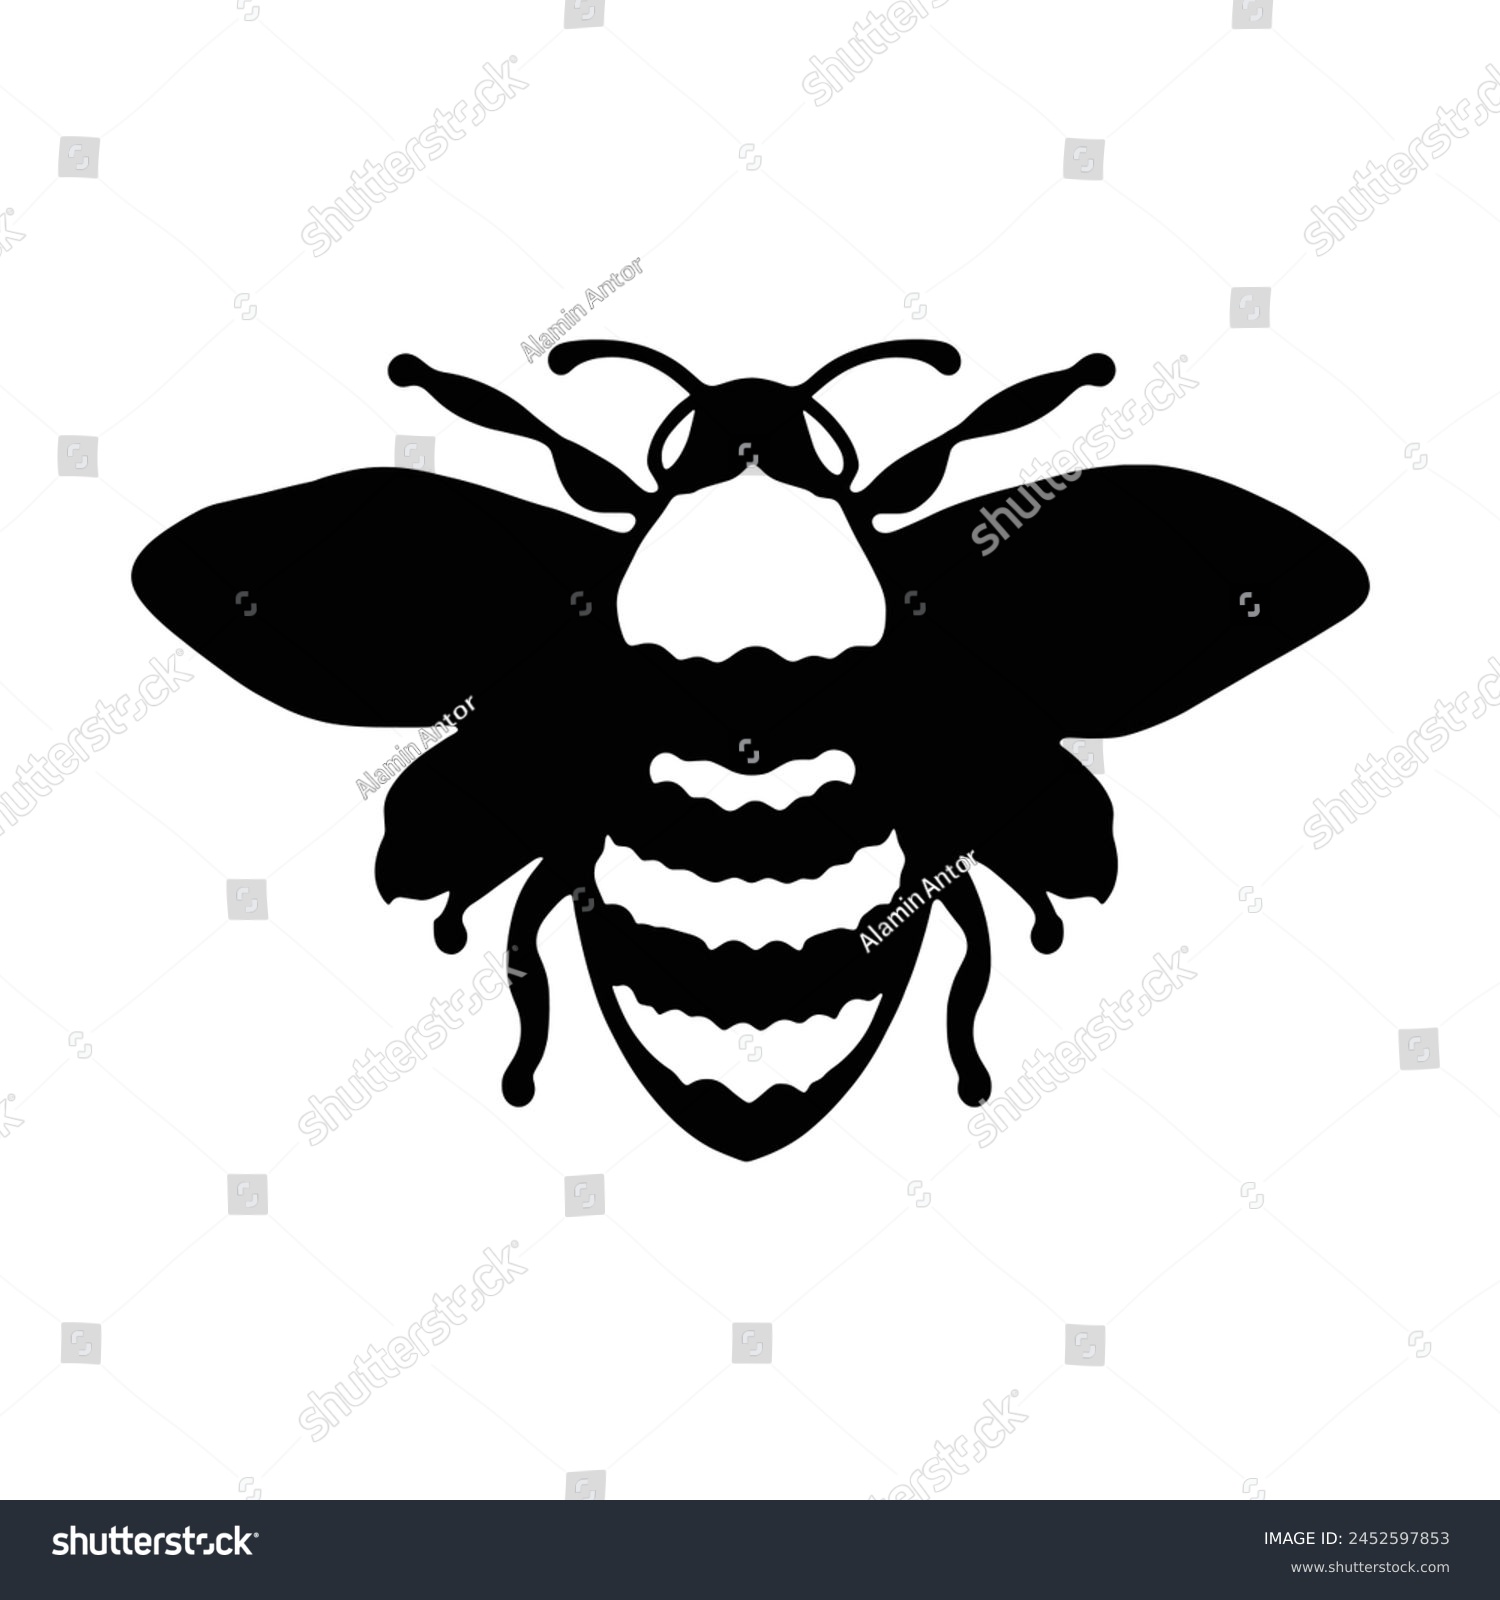 SVG of Bee Silhouette Design Vector Illustration Clipart Eps svg